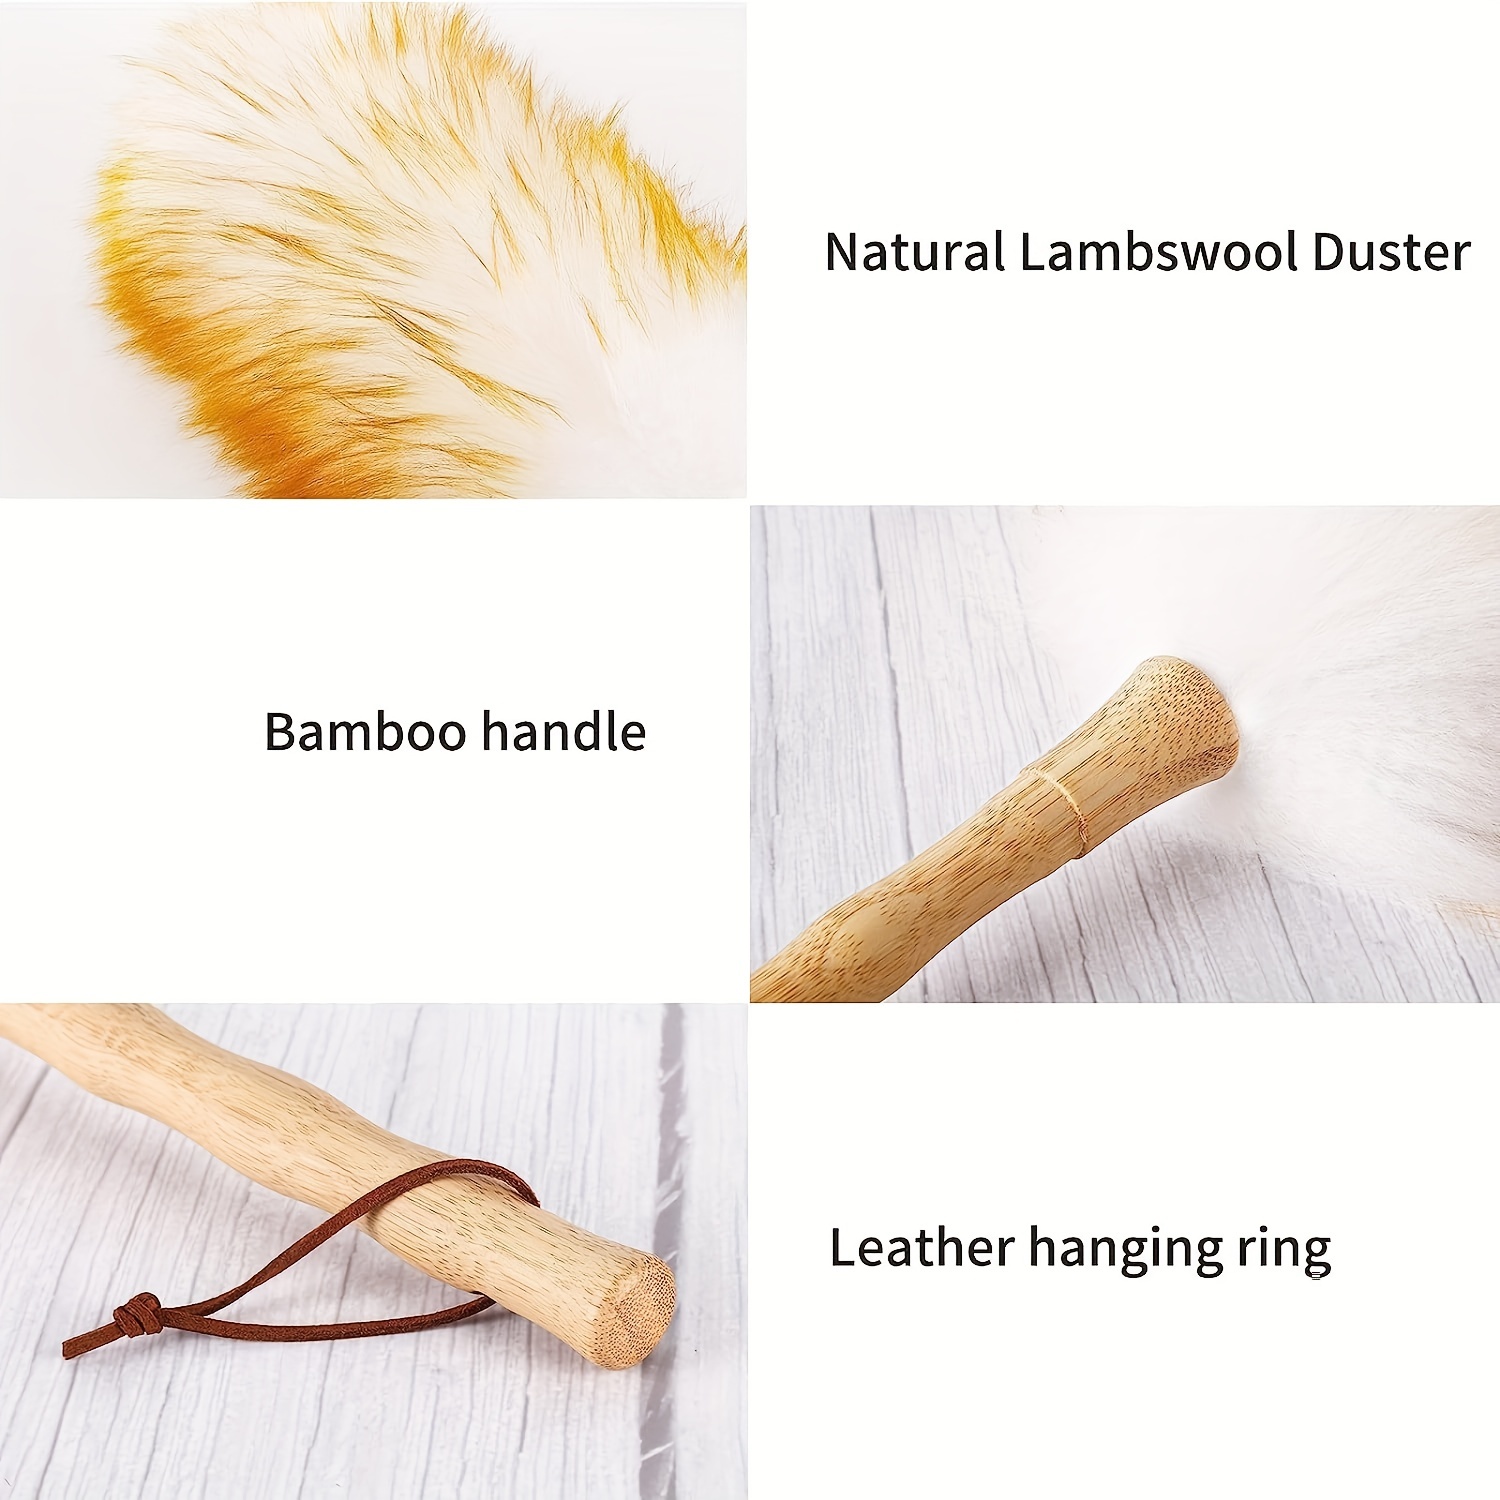 10 Lambswool Duster - Wool Shop